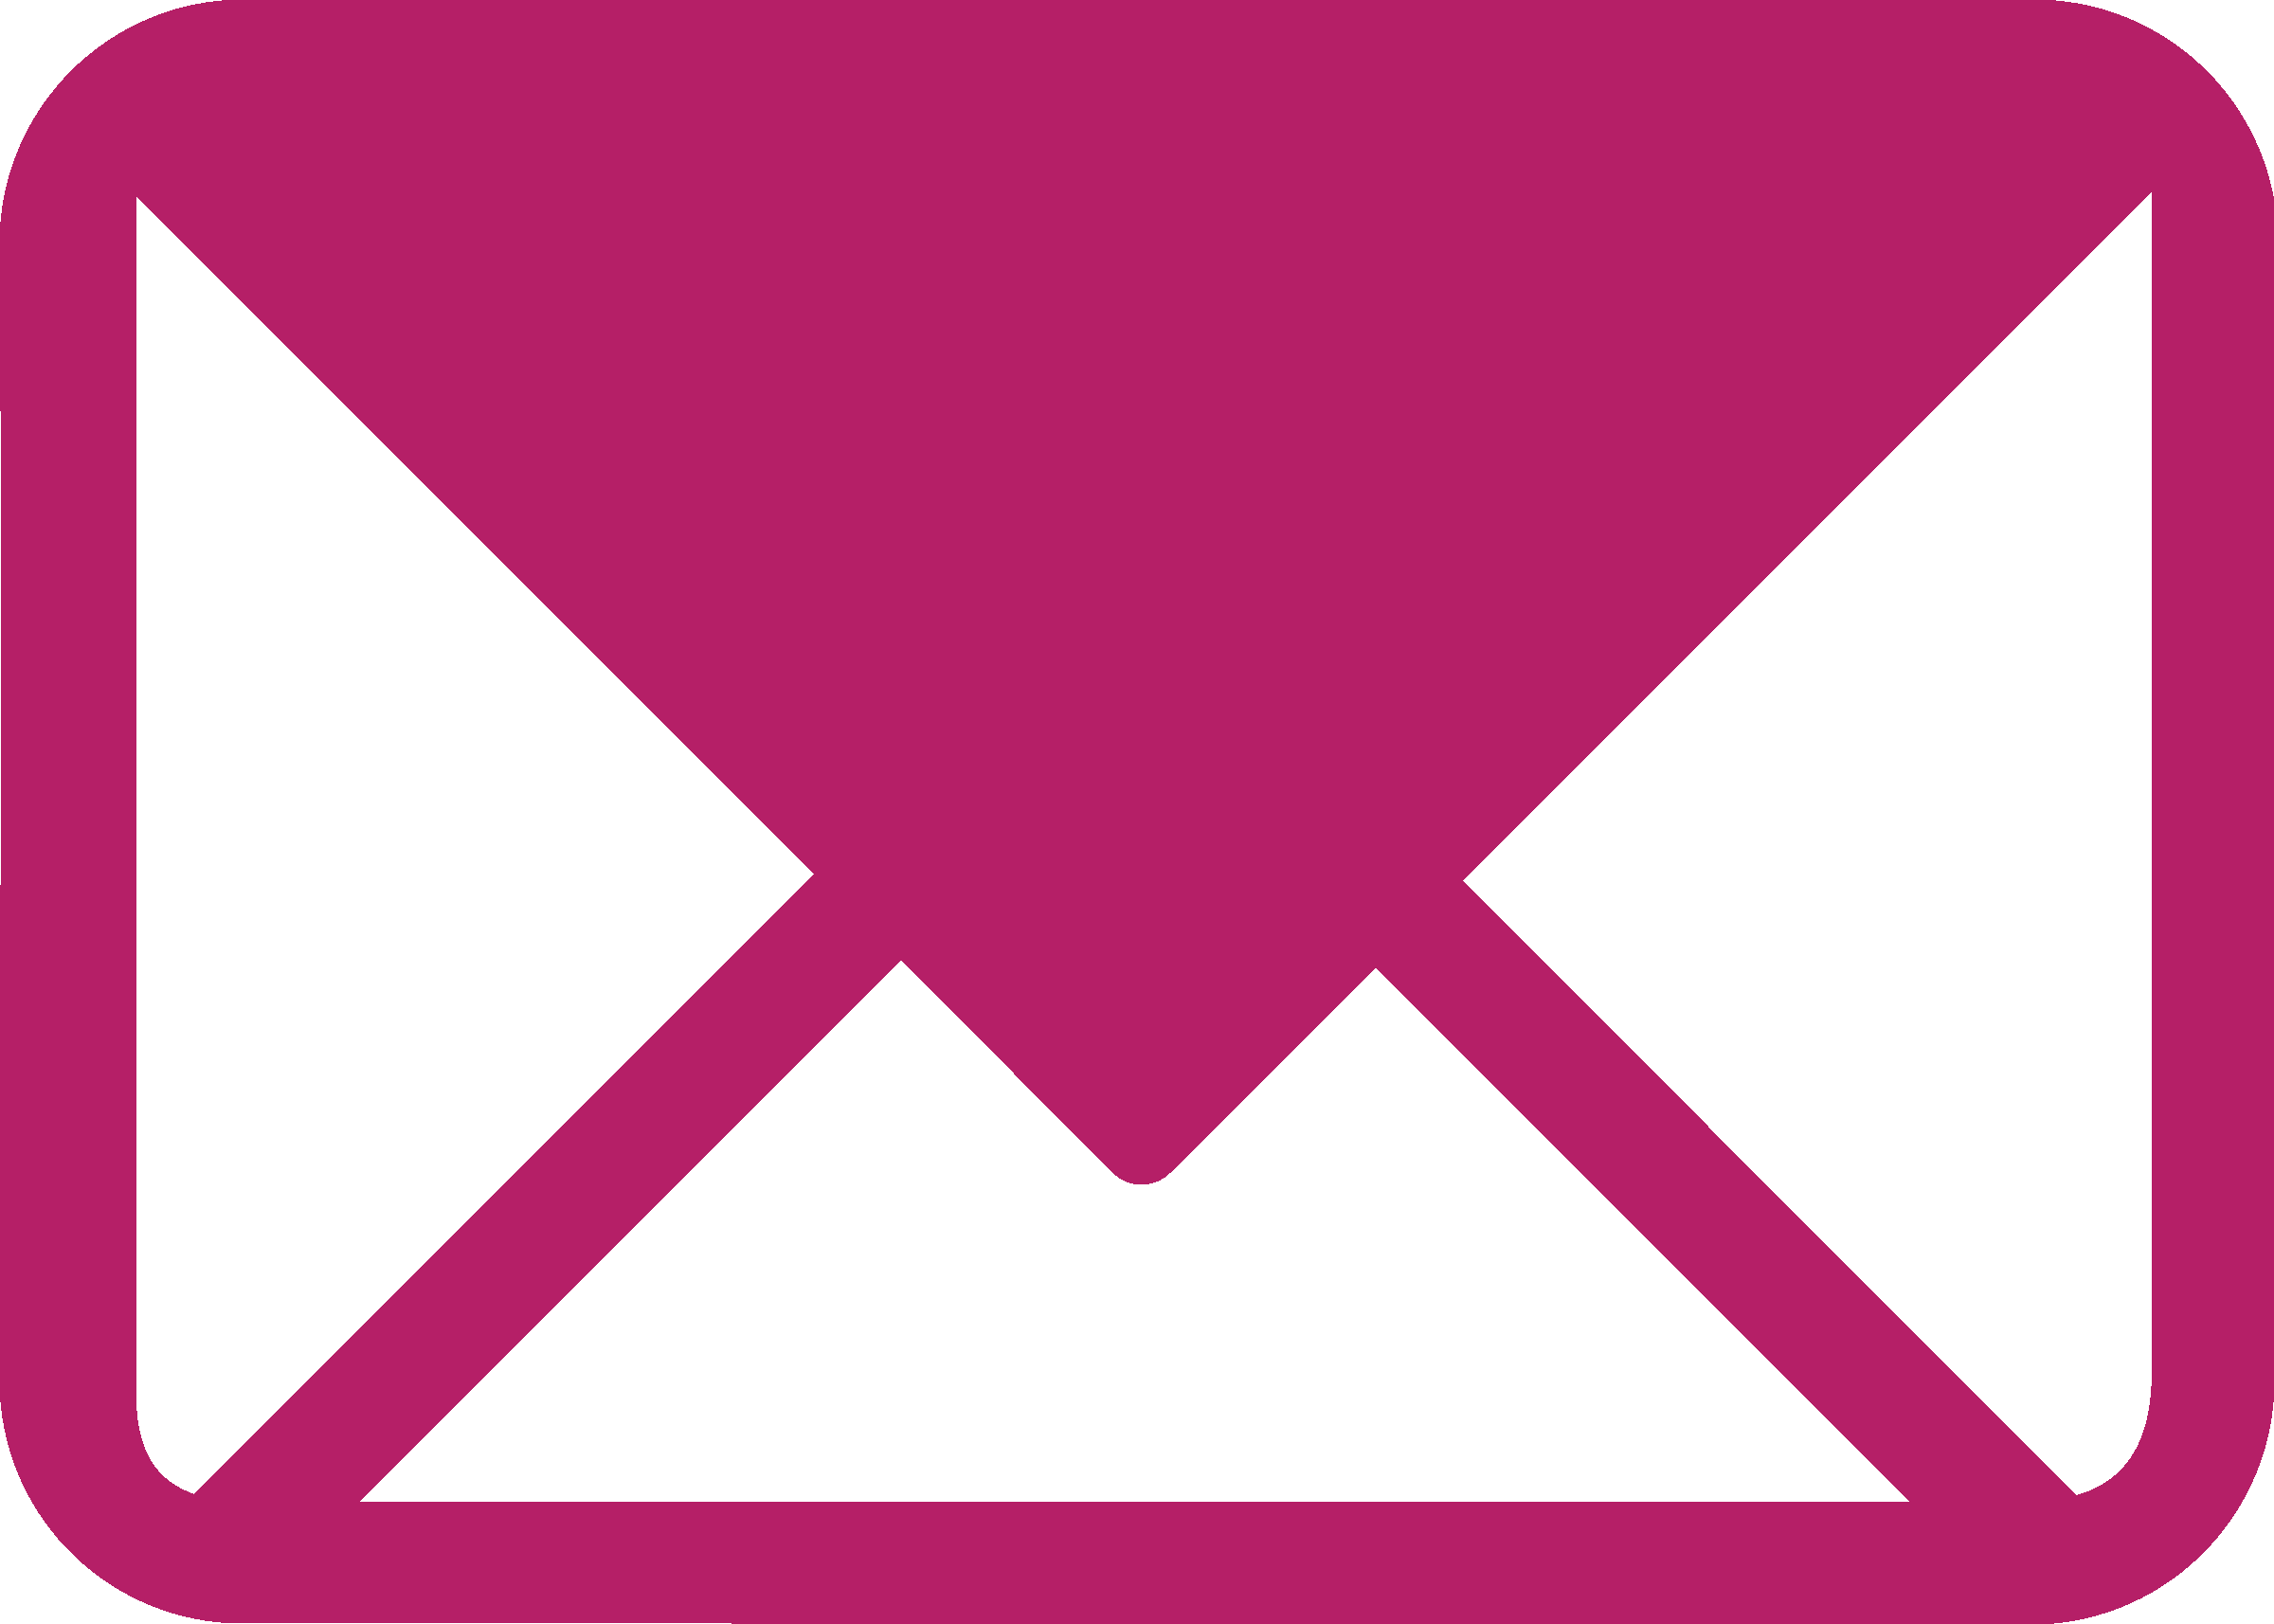 mail-purple.png (35 KB)